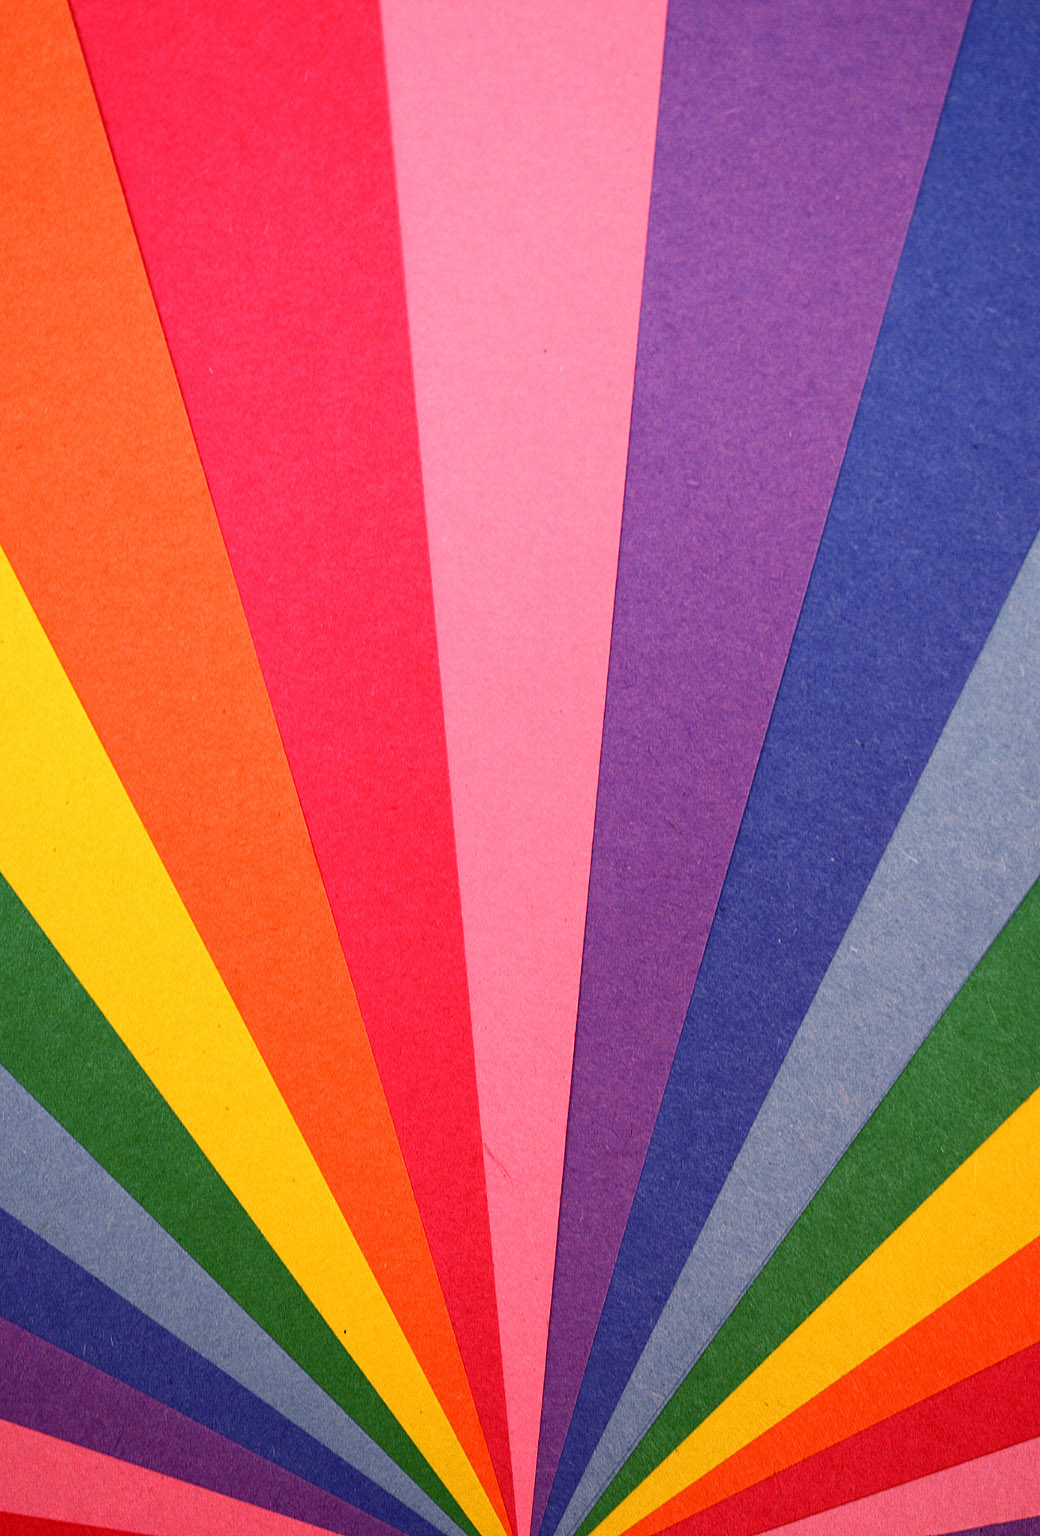 Rainbow Wallpaper Iphone - Rainbow Hd Wallpaper Iphone , HD Wallpaper & Backgrounds